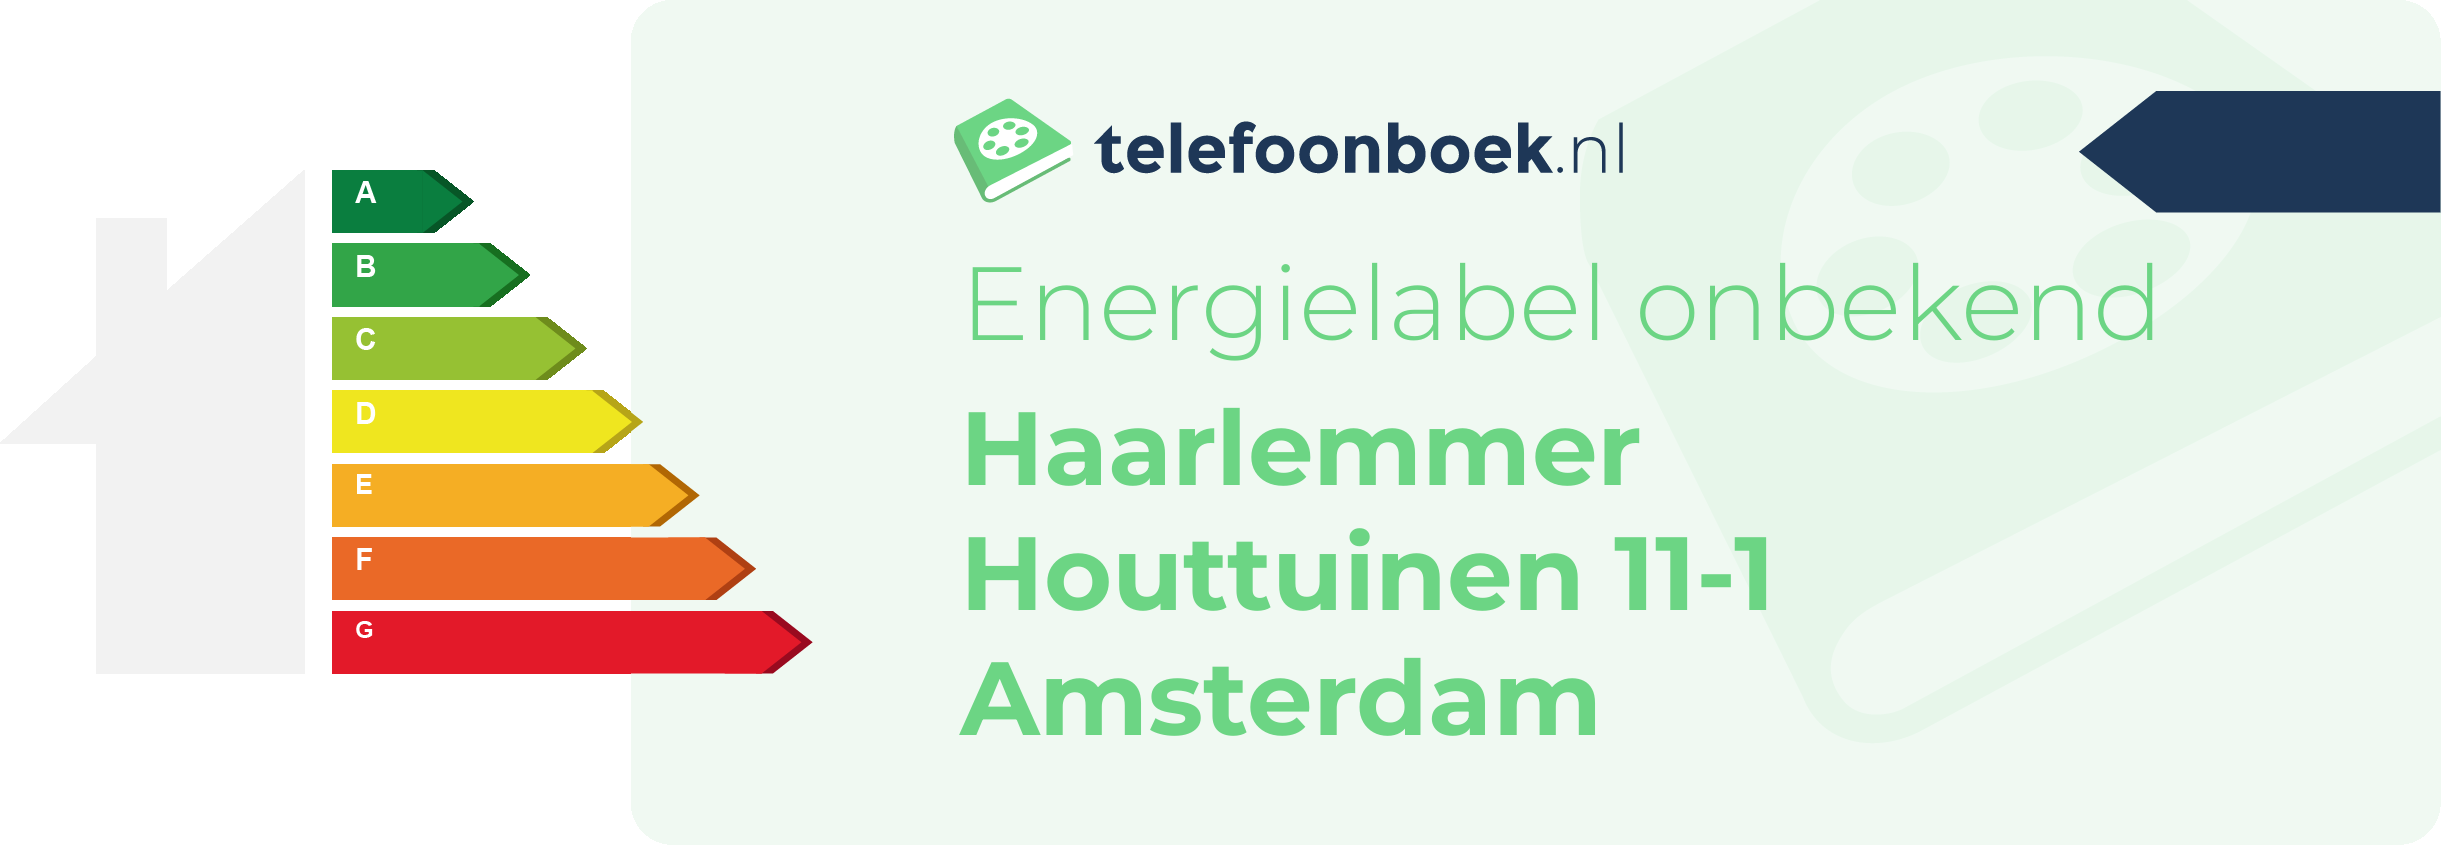 Energielabel Haarlemmer Houttuinen 11-1 Amsterdam